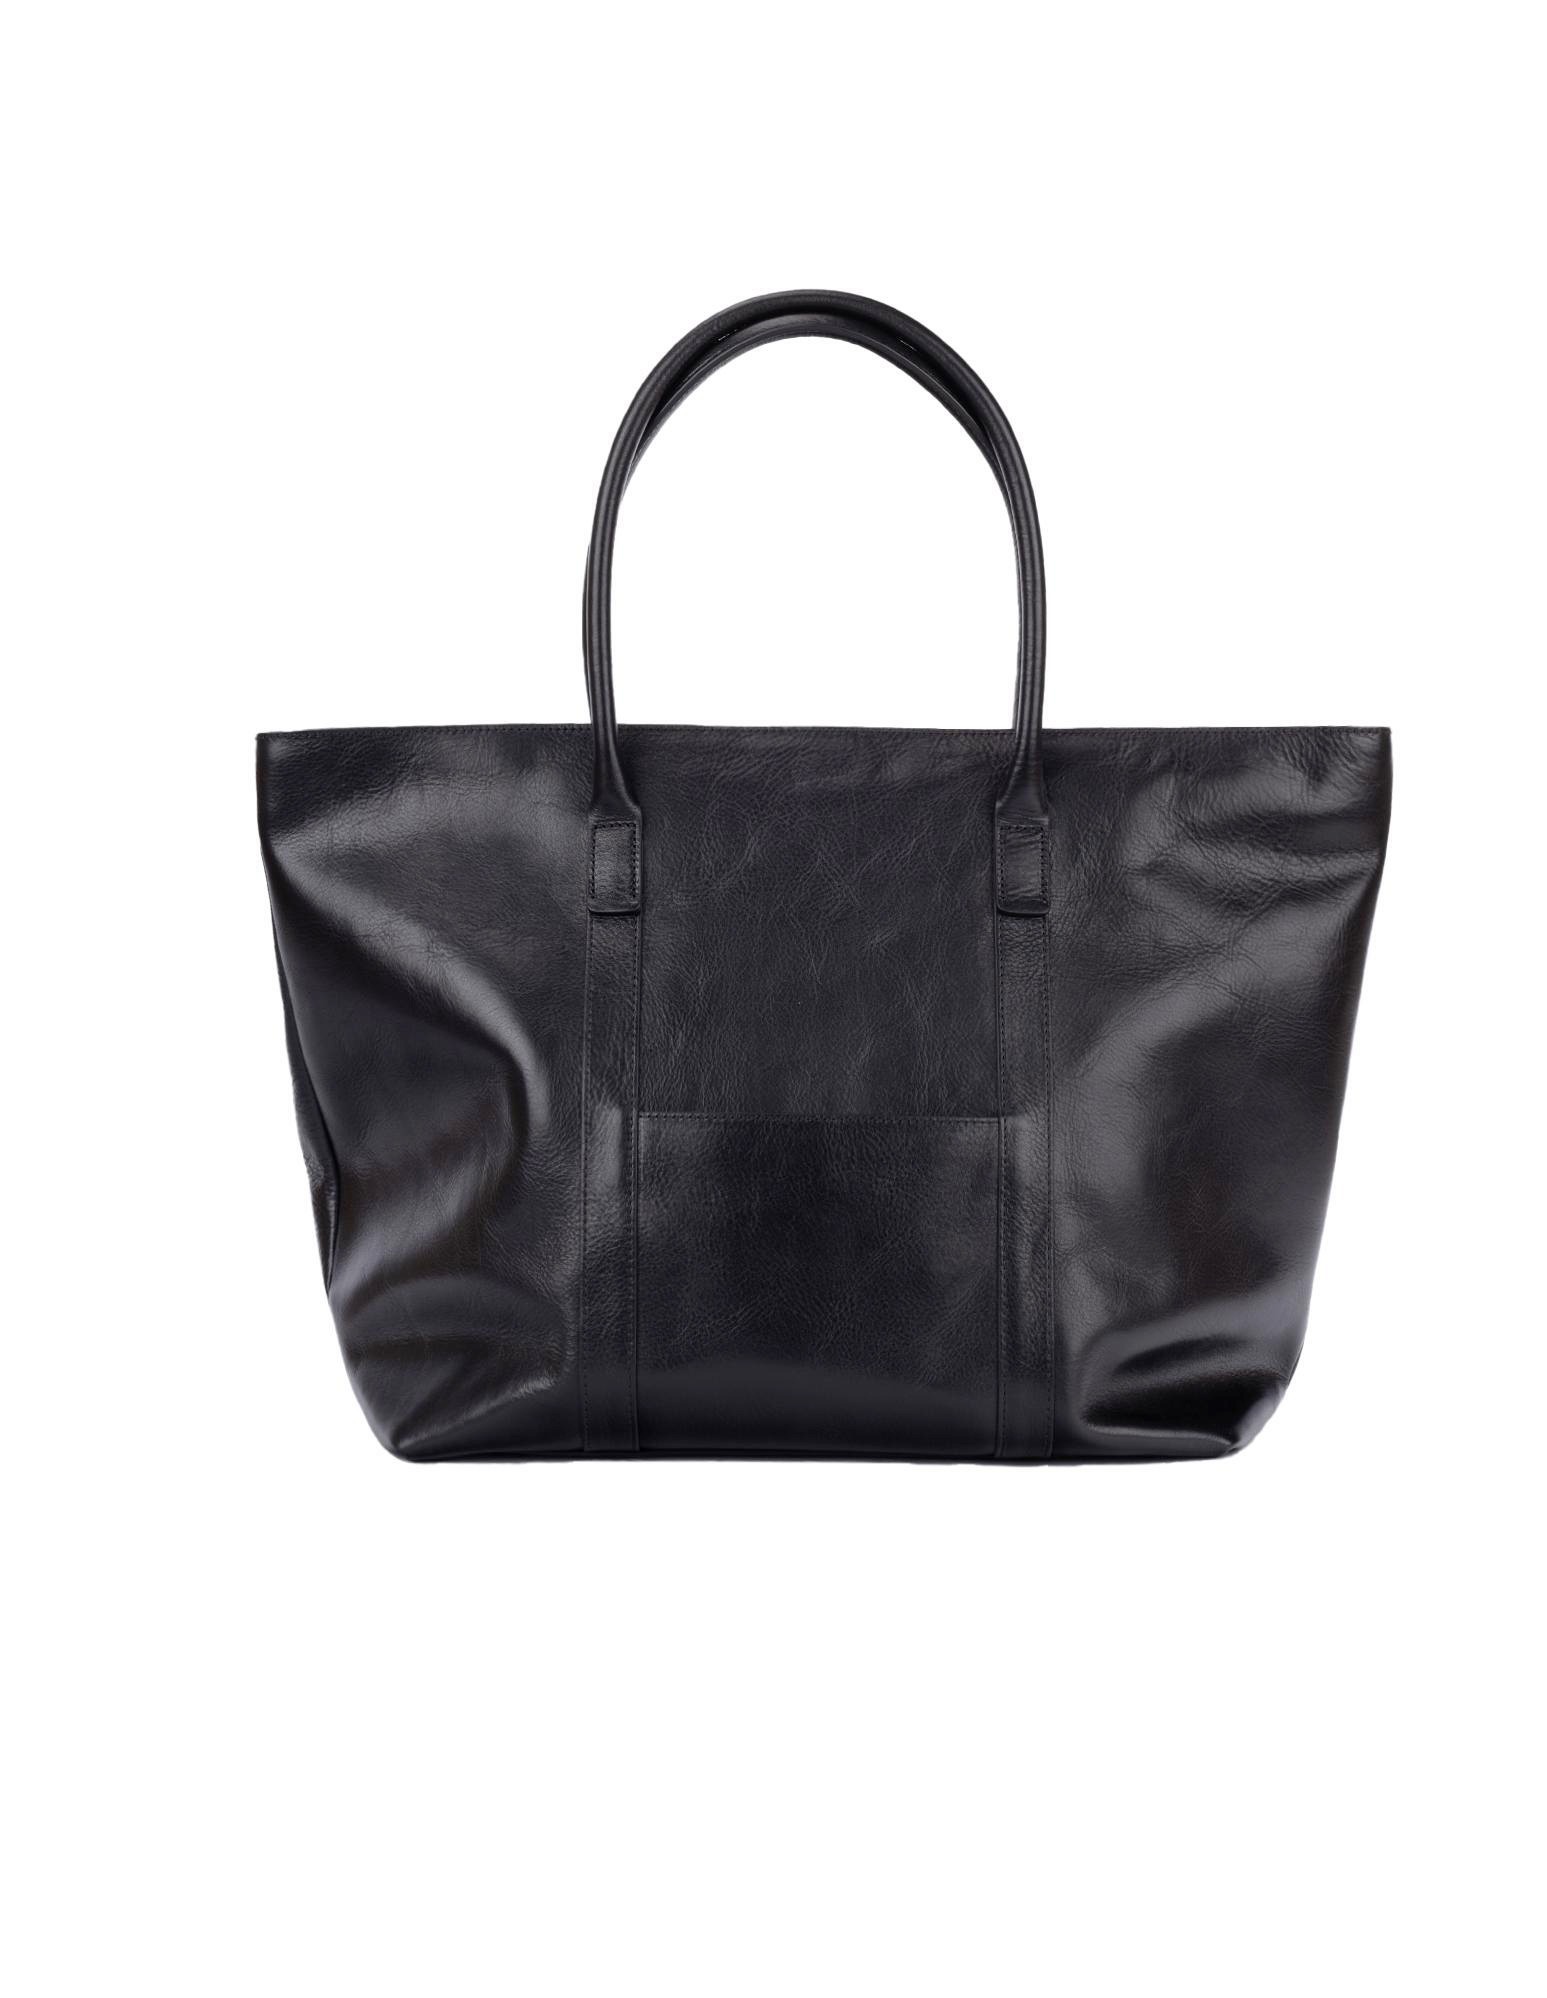 Essential Leather Tote Bag (Black)